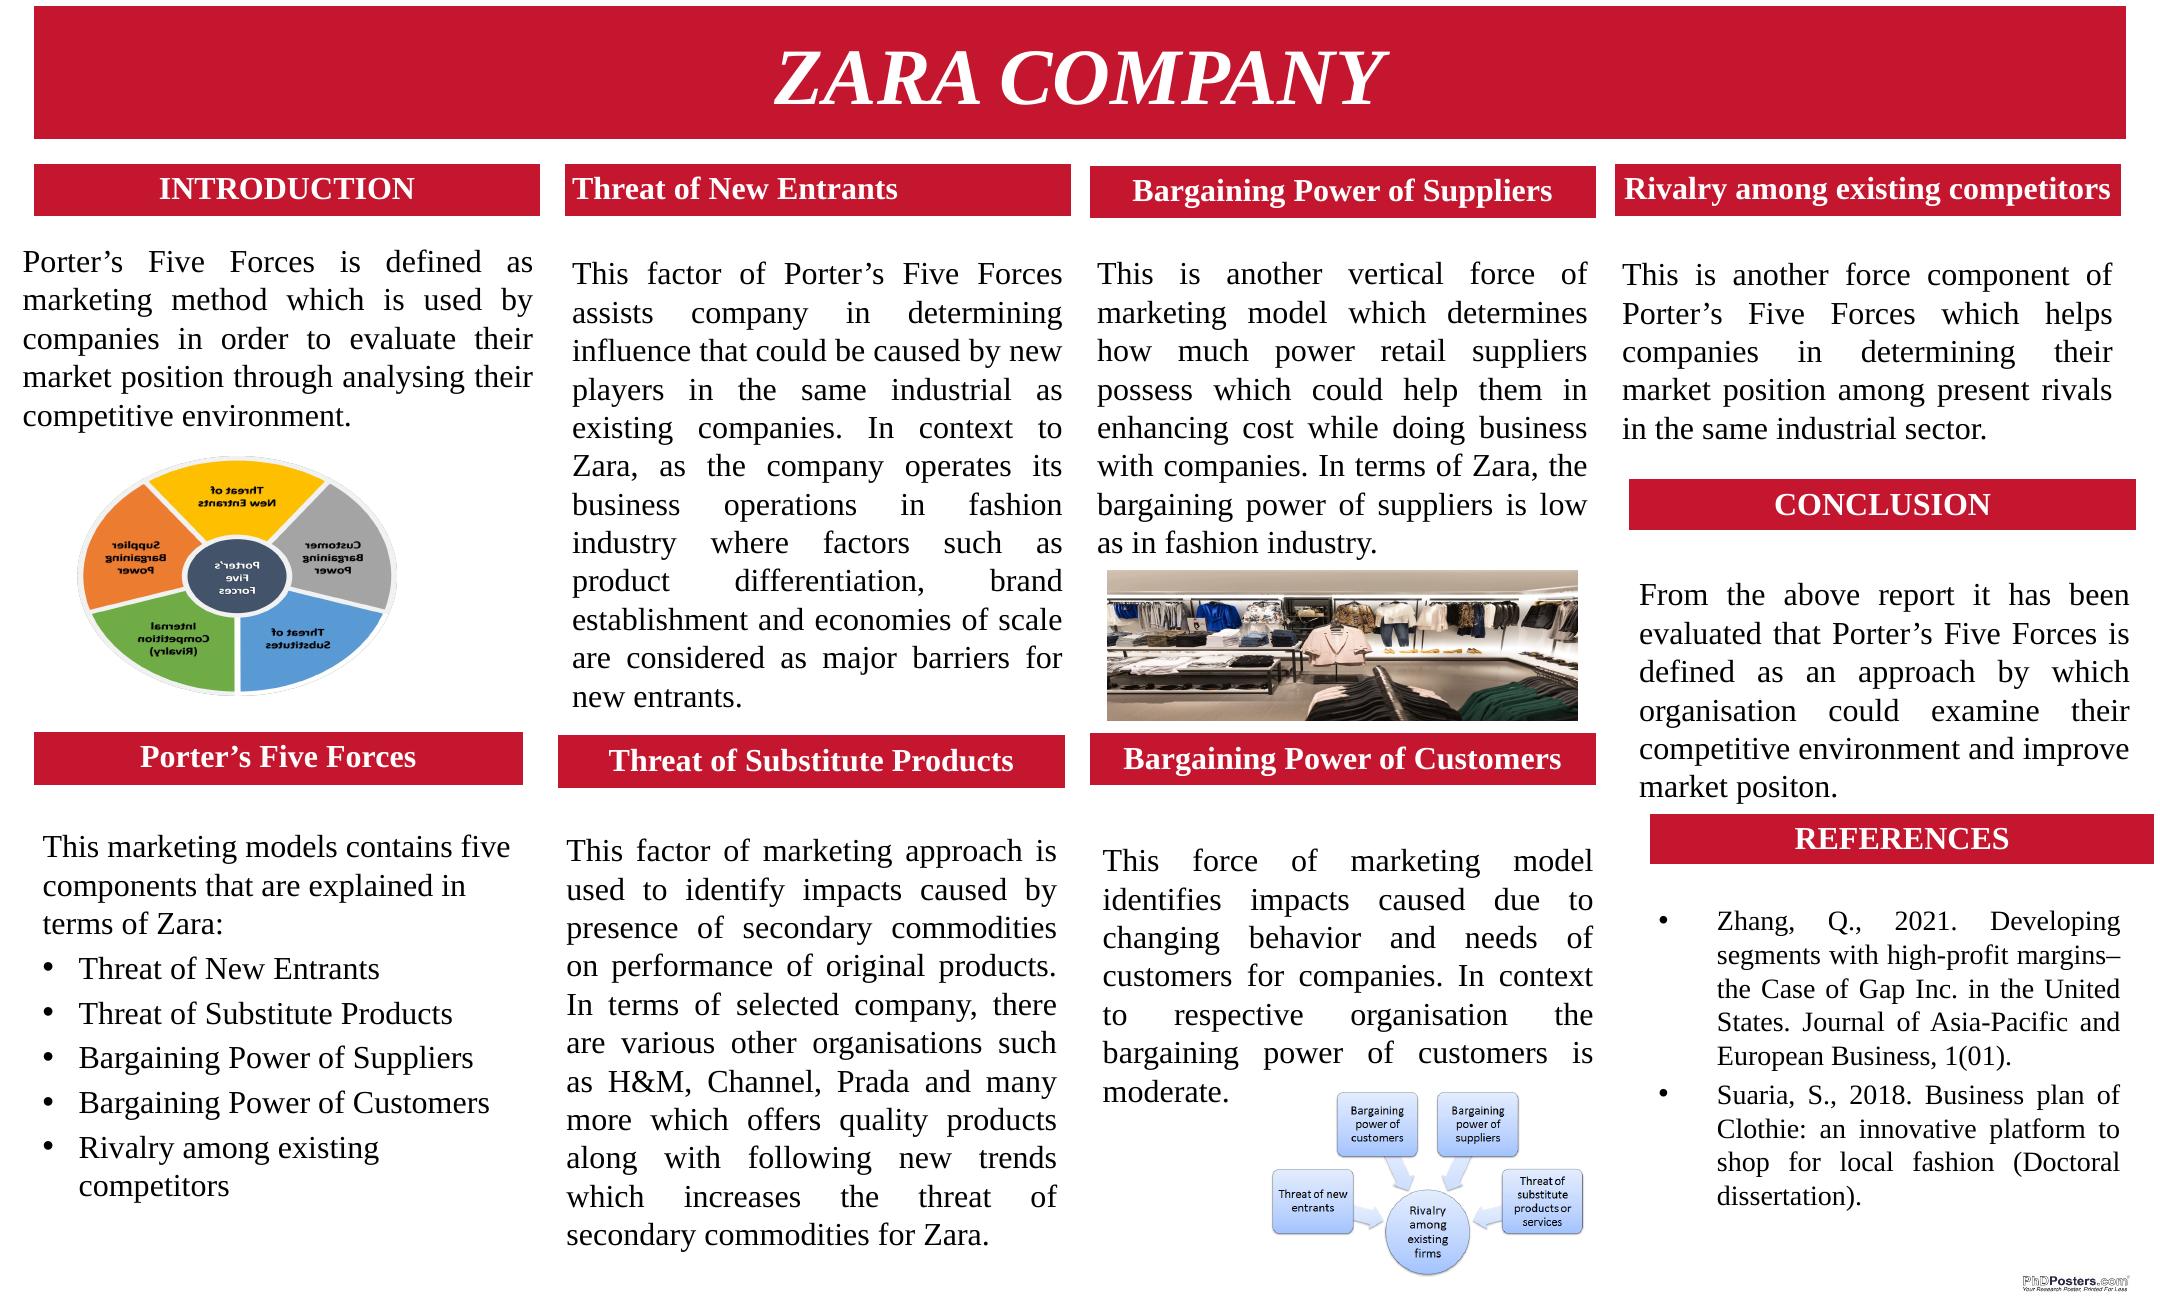 Analyzing Zara's Market Position through Porter's Five Forces_1